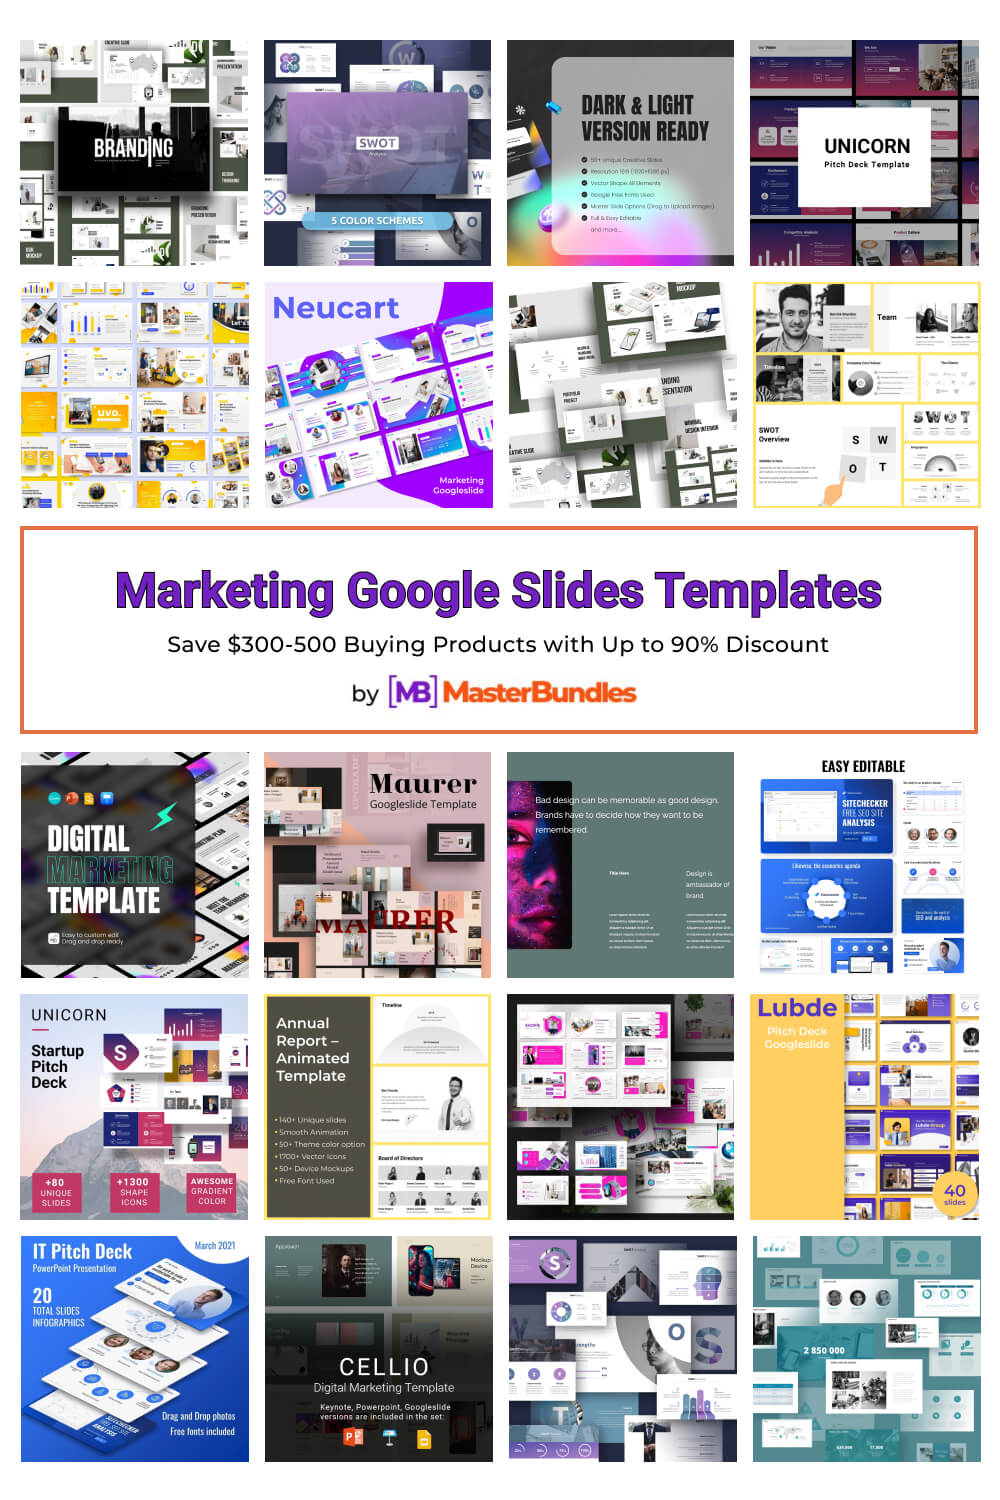 marketing google slides templates pinterest image.